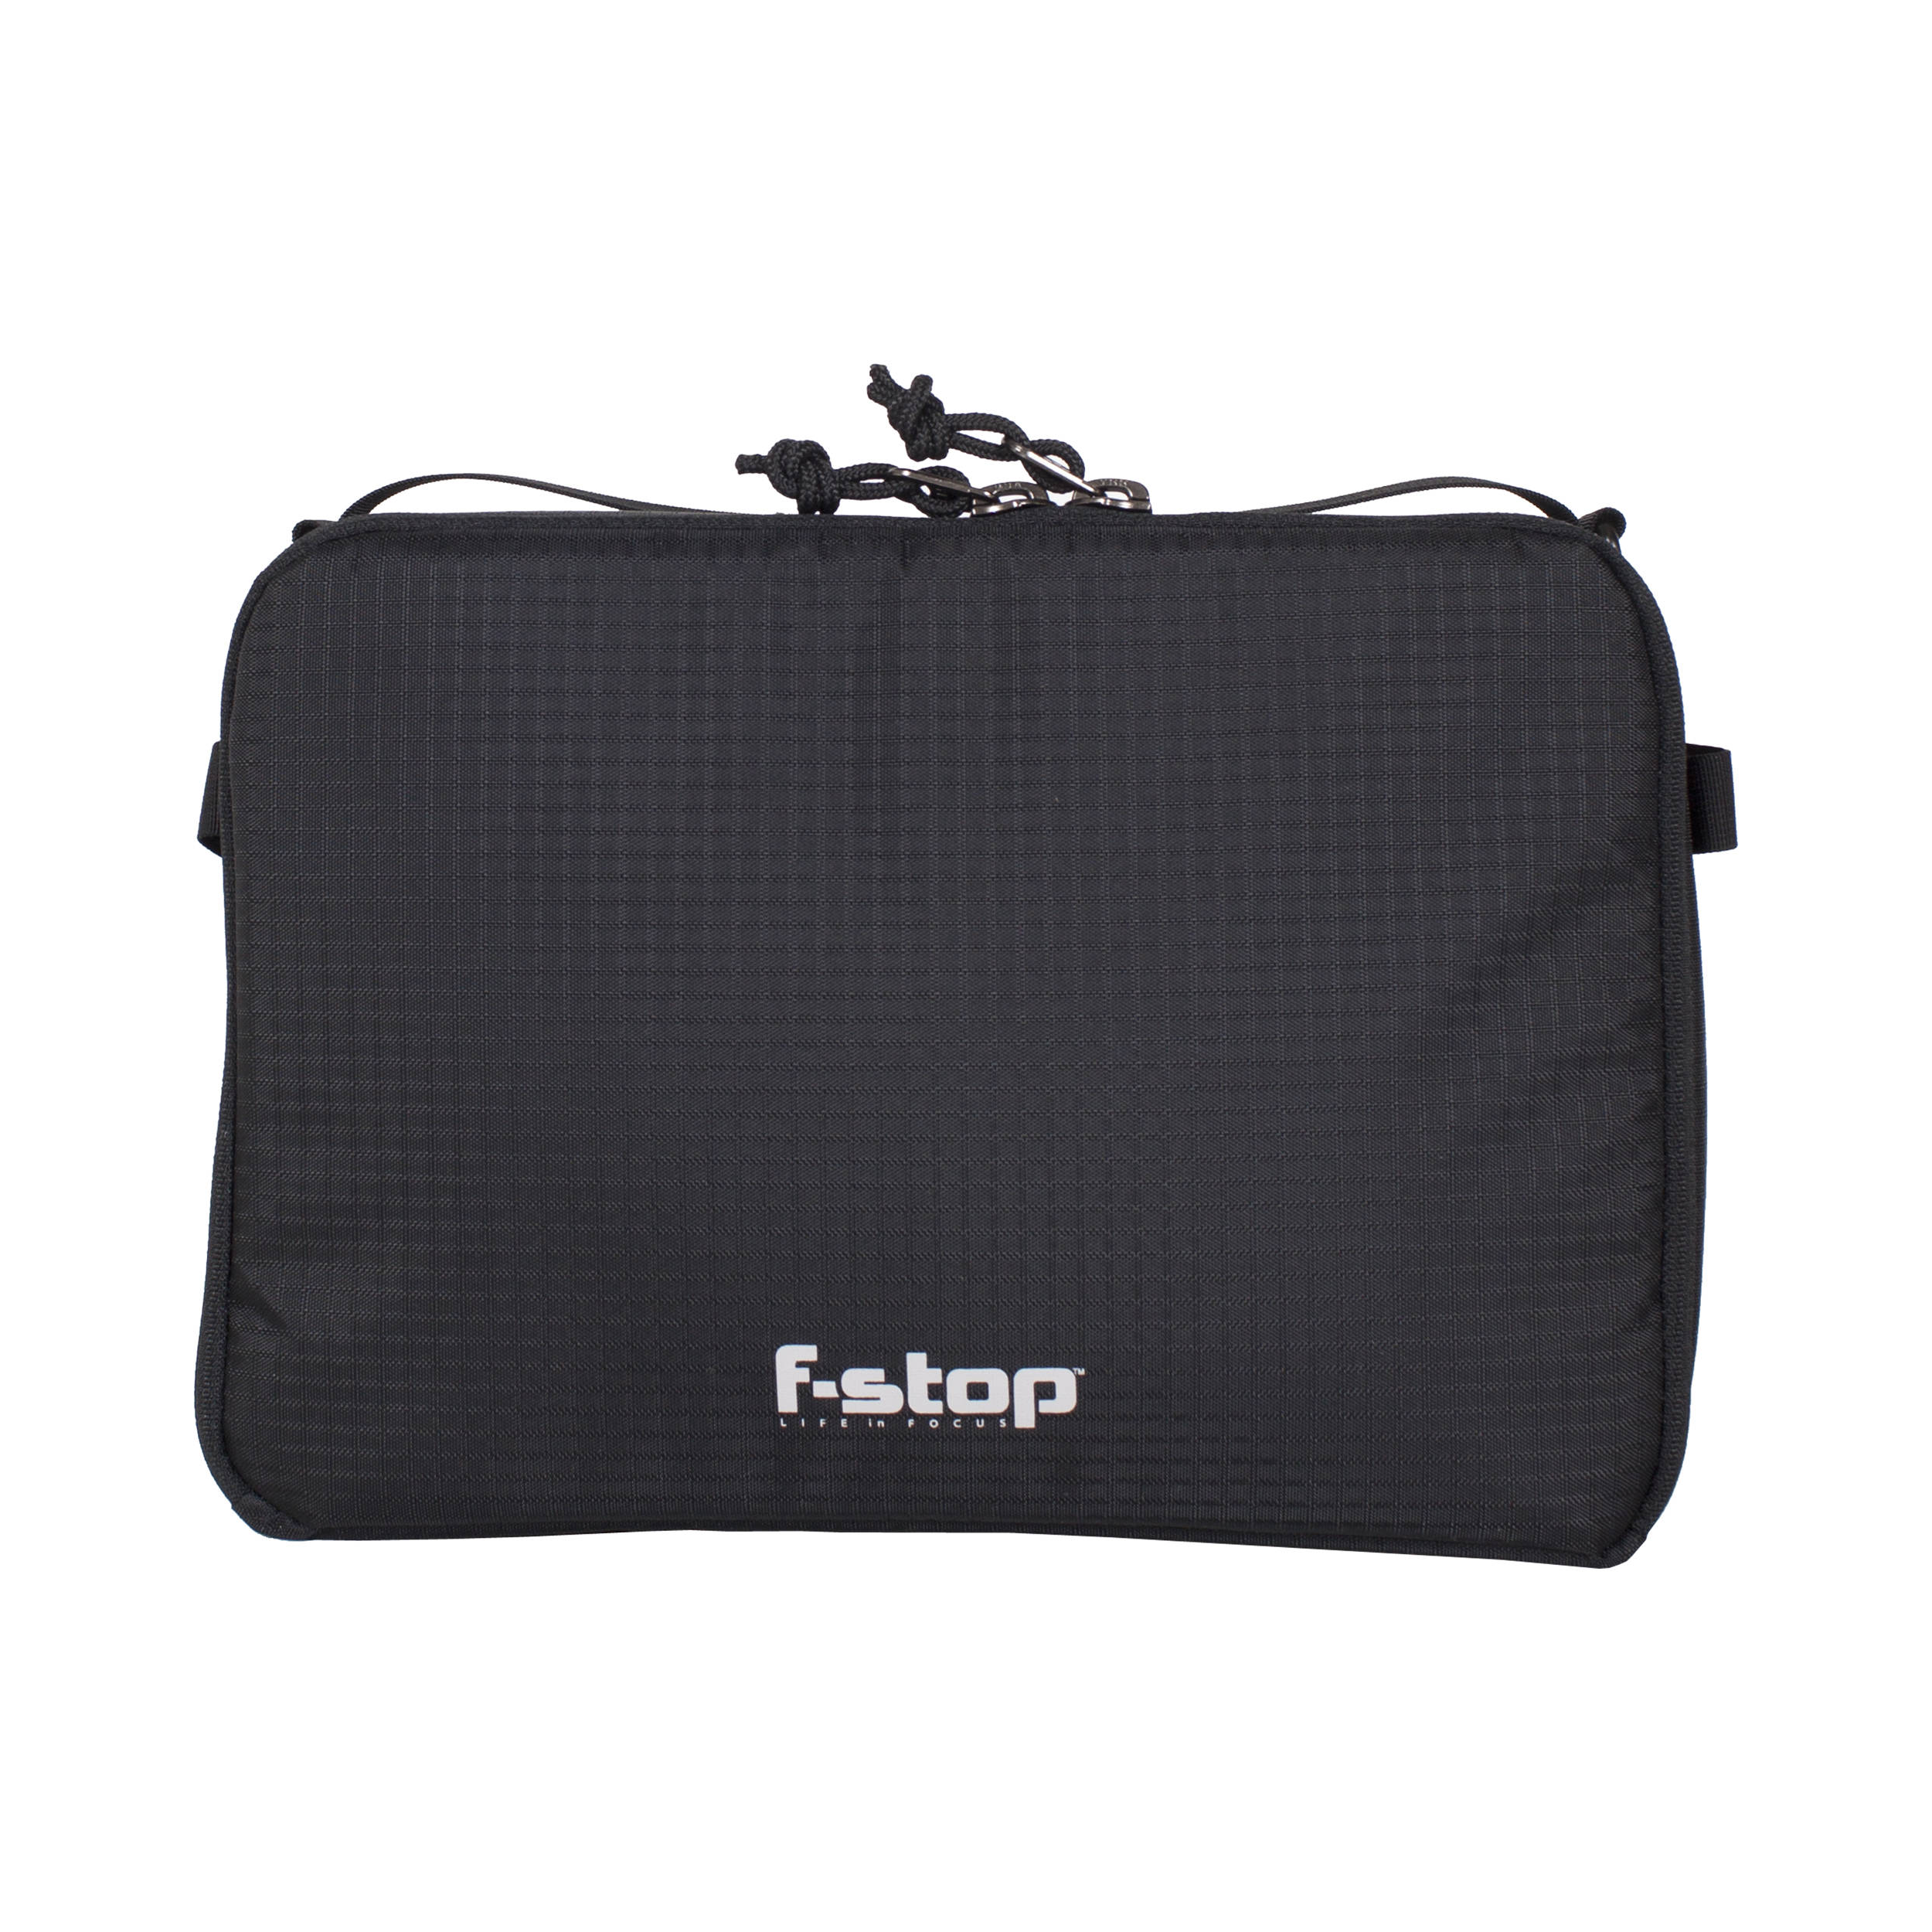 f-stop Shallow Camera Bag Insert - small - Black